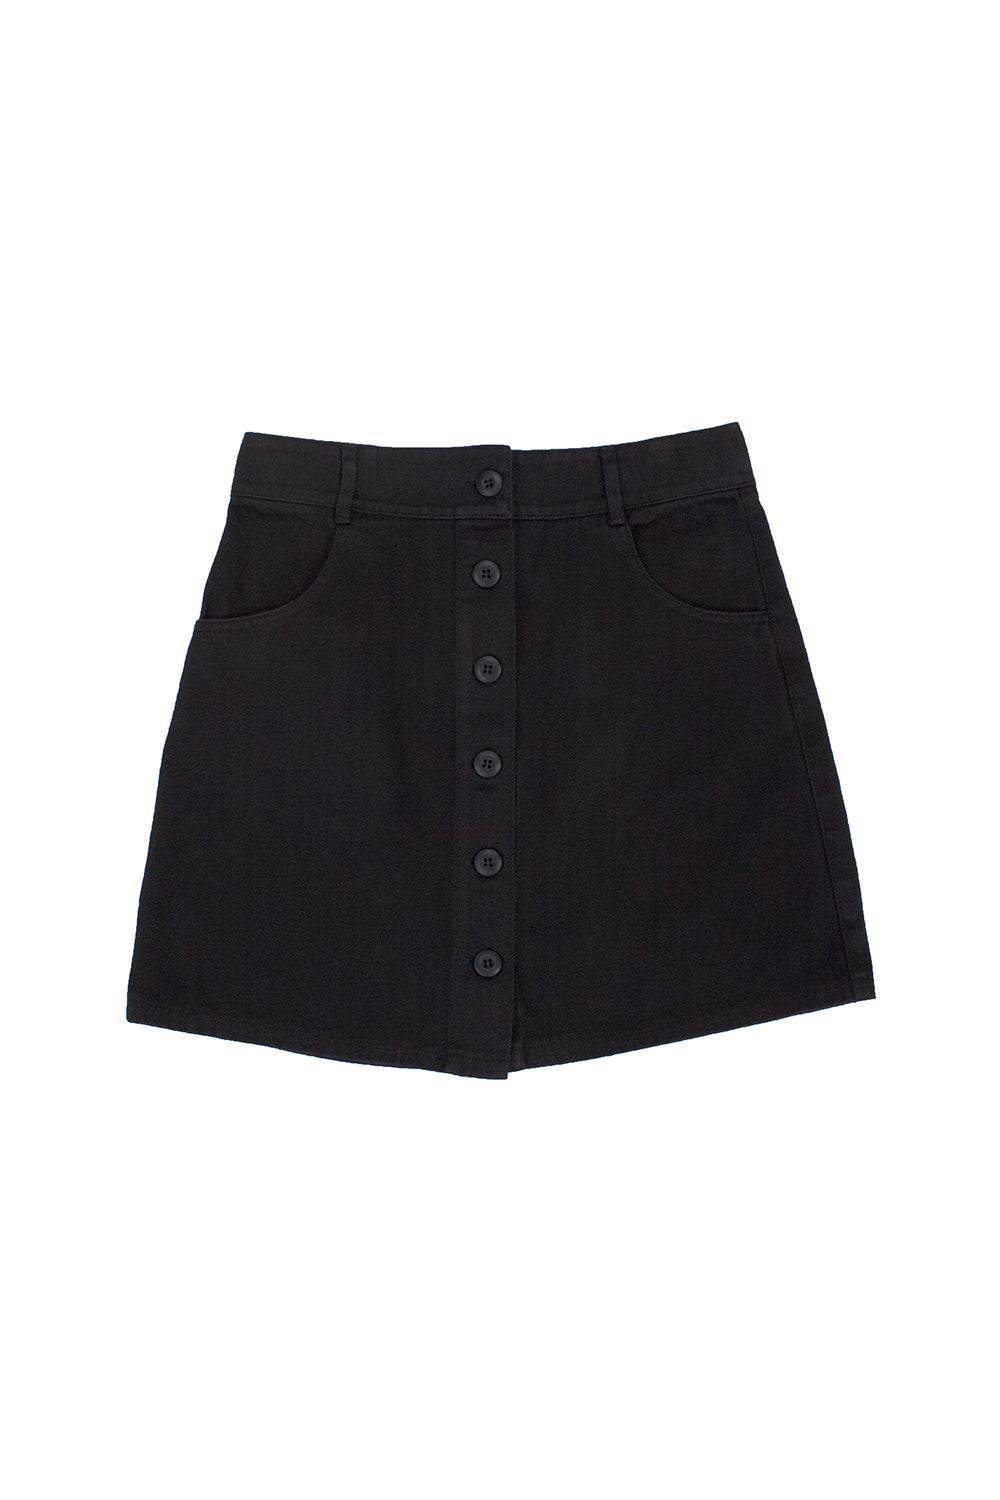 Vassar Skirt | Jungmaven Hemp Clothing & Accessories / Color: Black